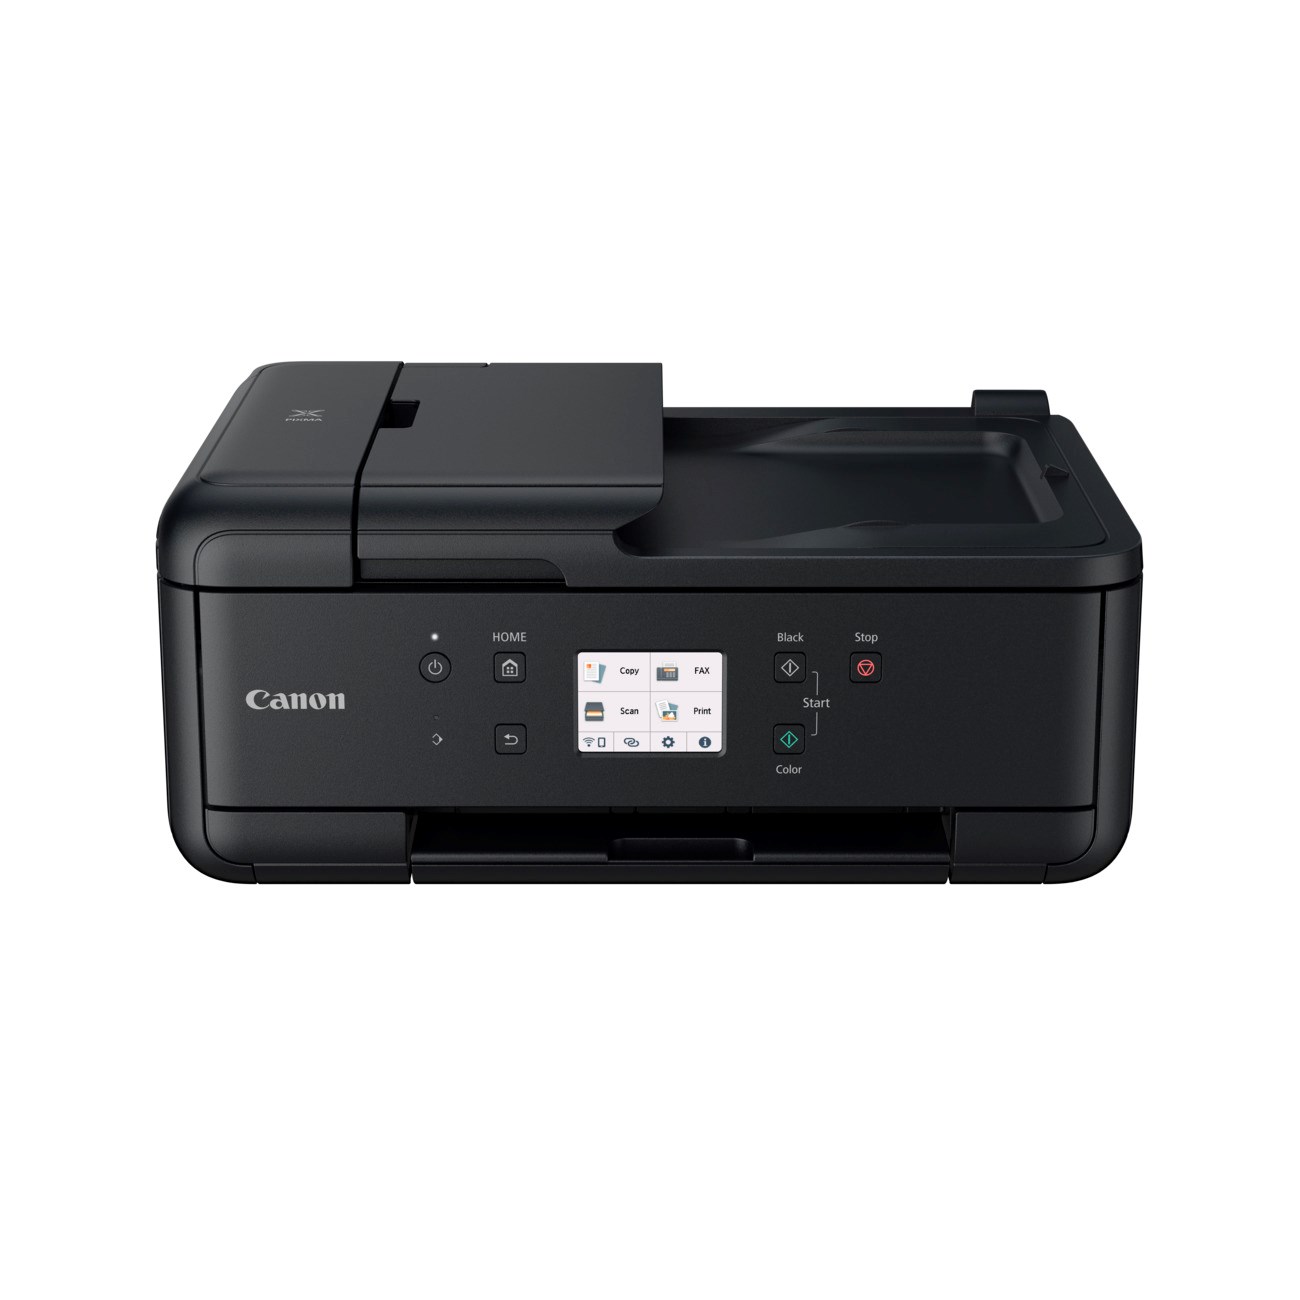 Canon PIXMA Tiskárna TR7650 black- barevná, MF (tisk, kopírka, sken, fax, cloud), ADF, USB, Wi-Fi0 